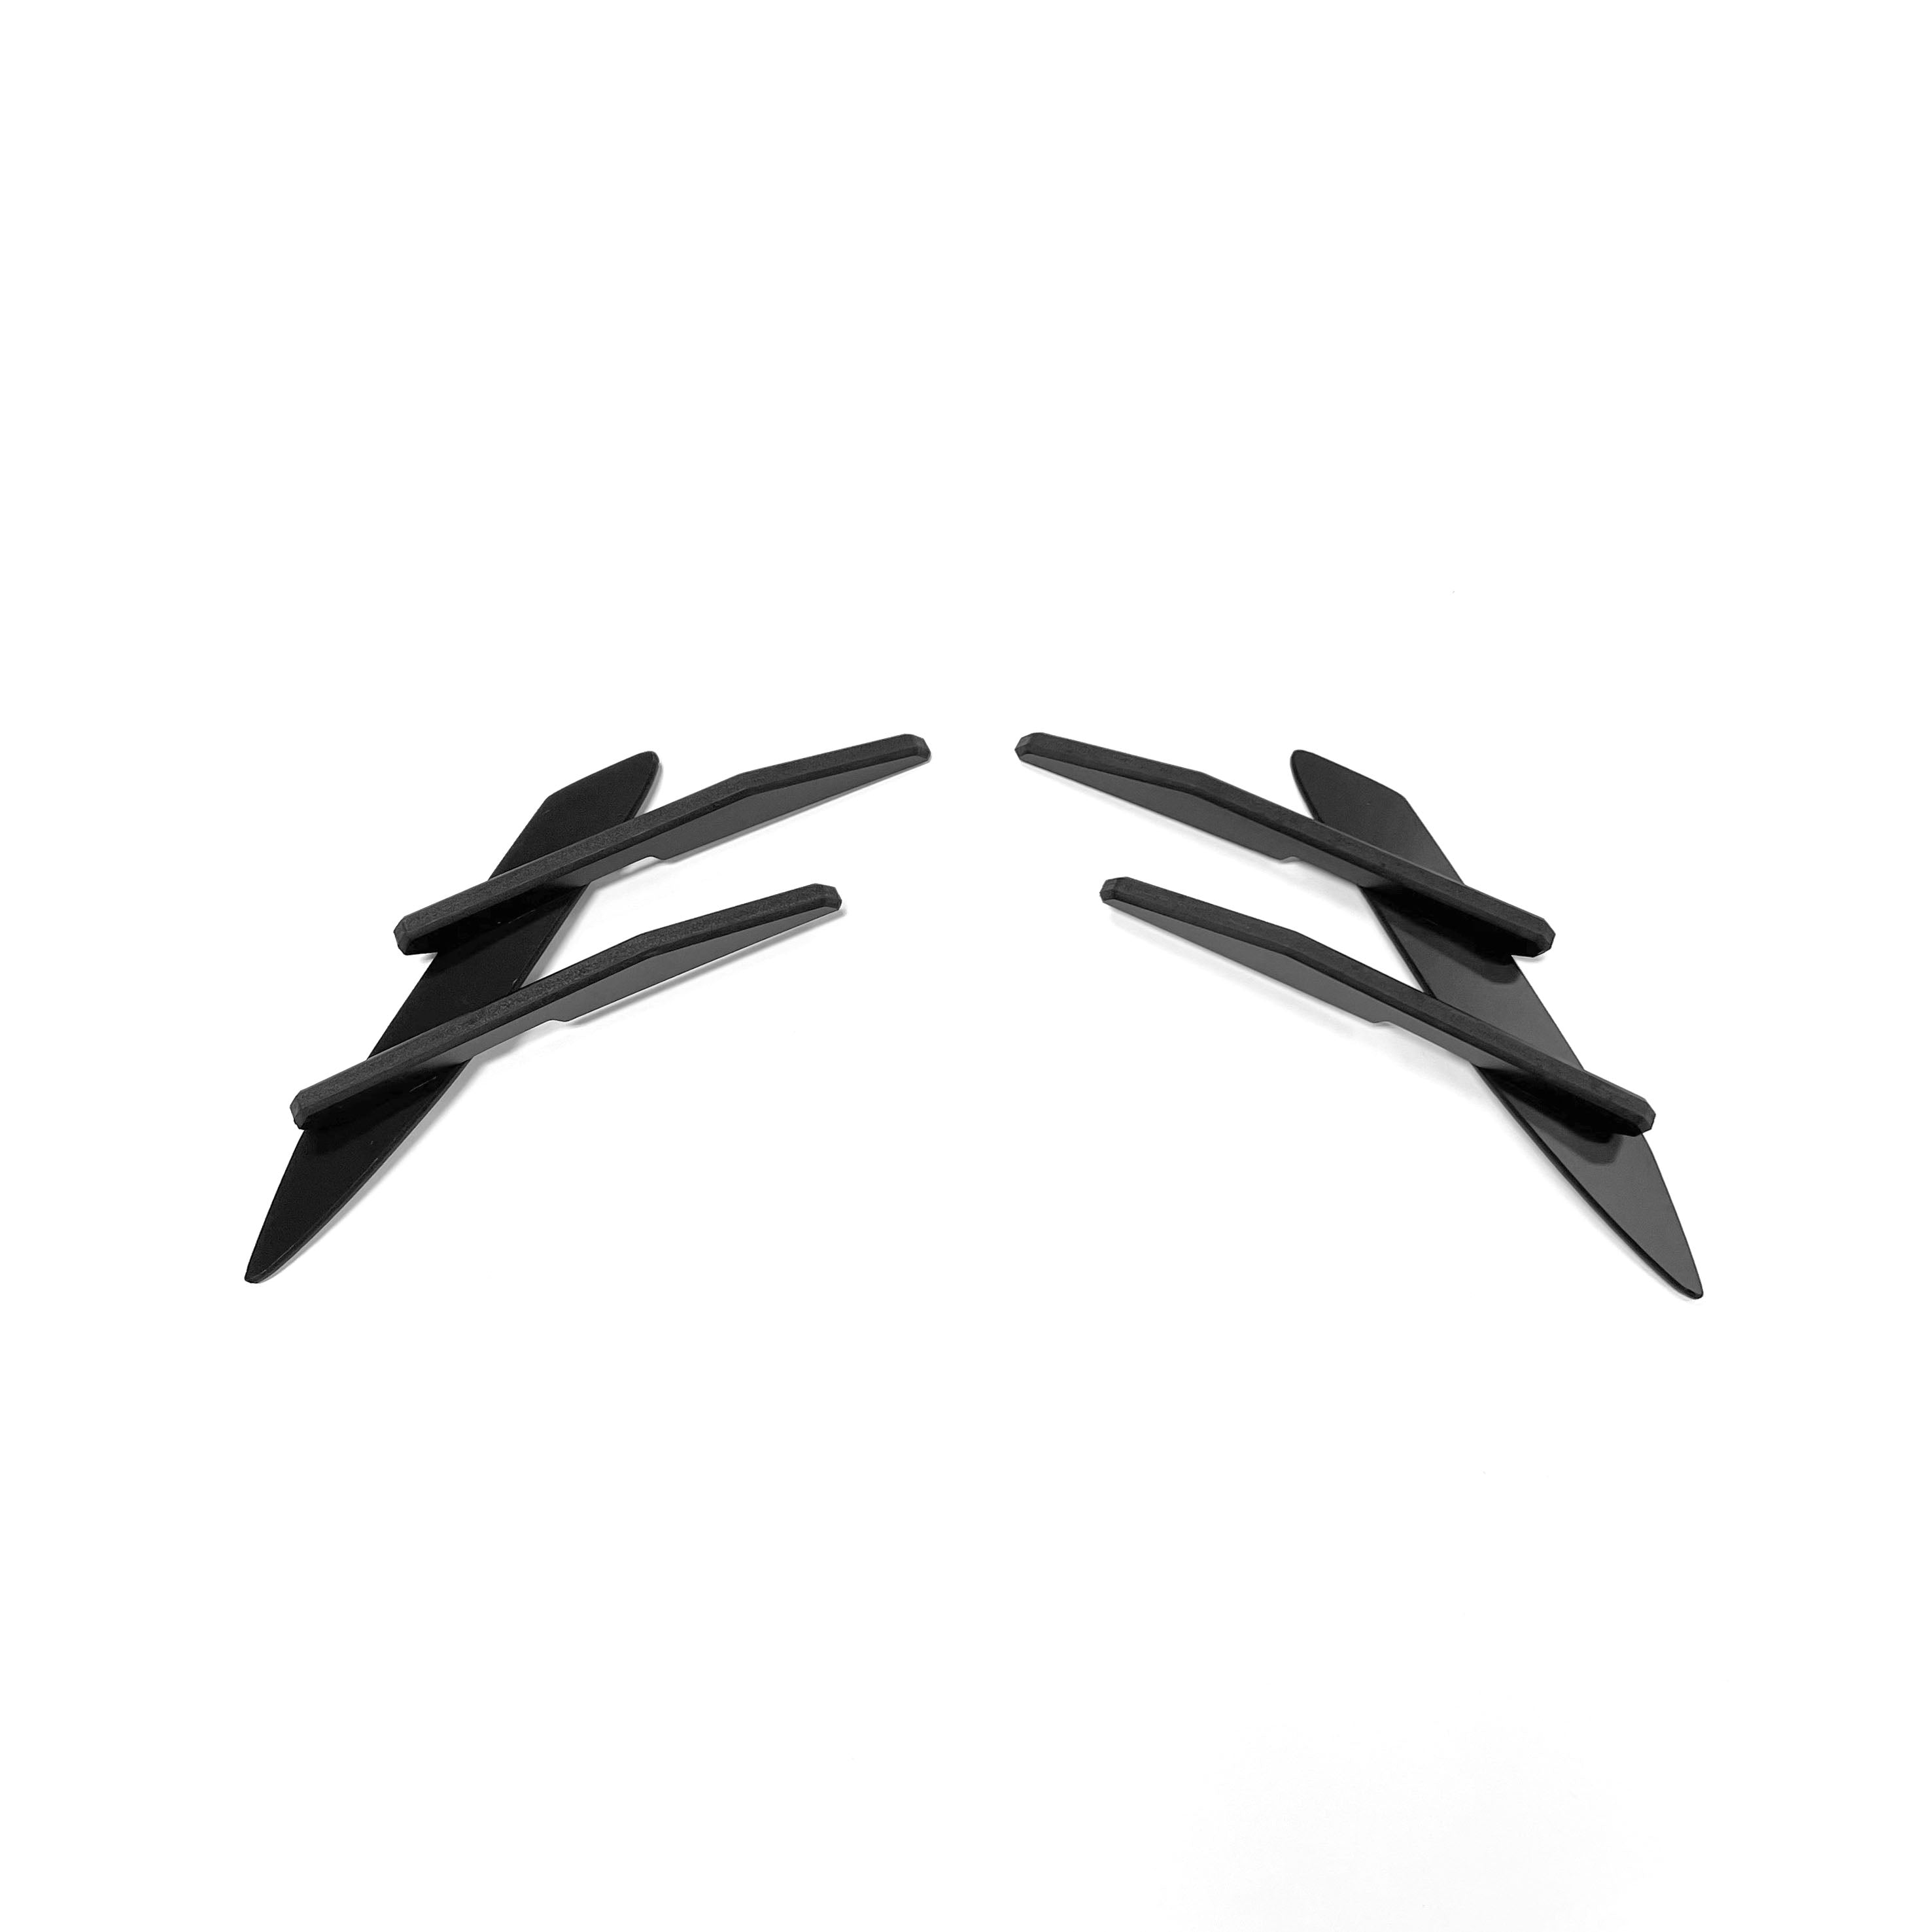 [KDMHolic Collection] CONVOY Rear Bumper Devil's Claws Canards [Matte Black] for Kia Stinger 2018+ GT & GT-Line Models